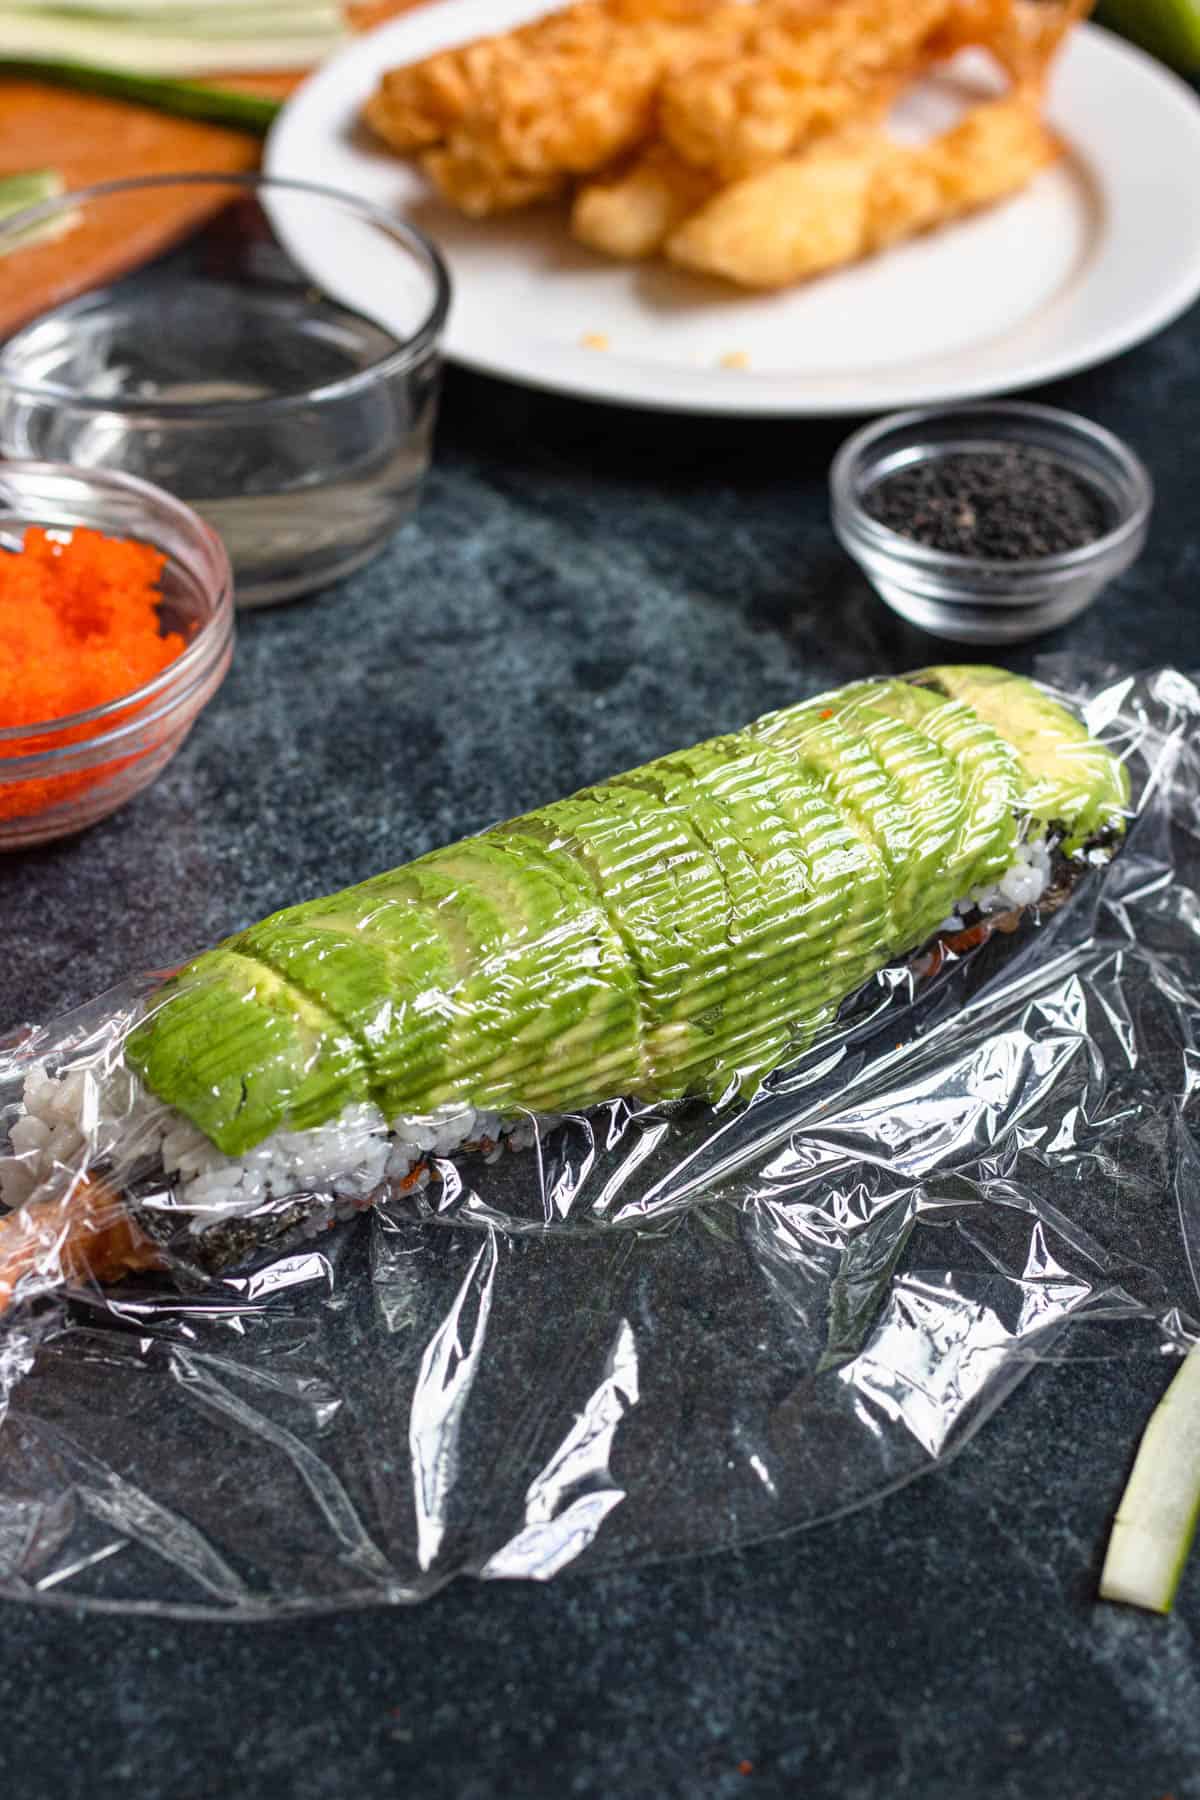 Plastic wrap covering avocado side of dragon roll sushi recipe. 